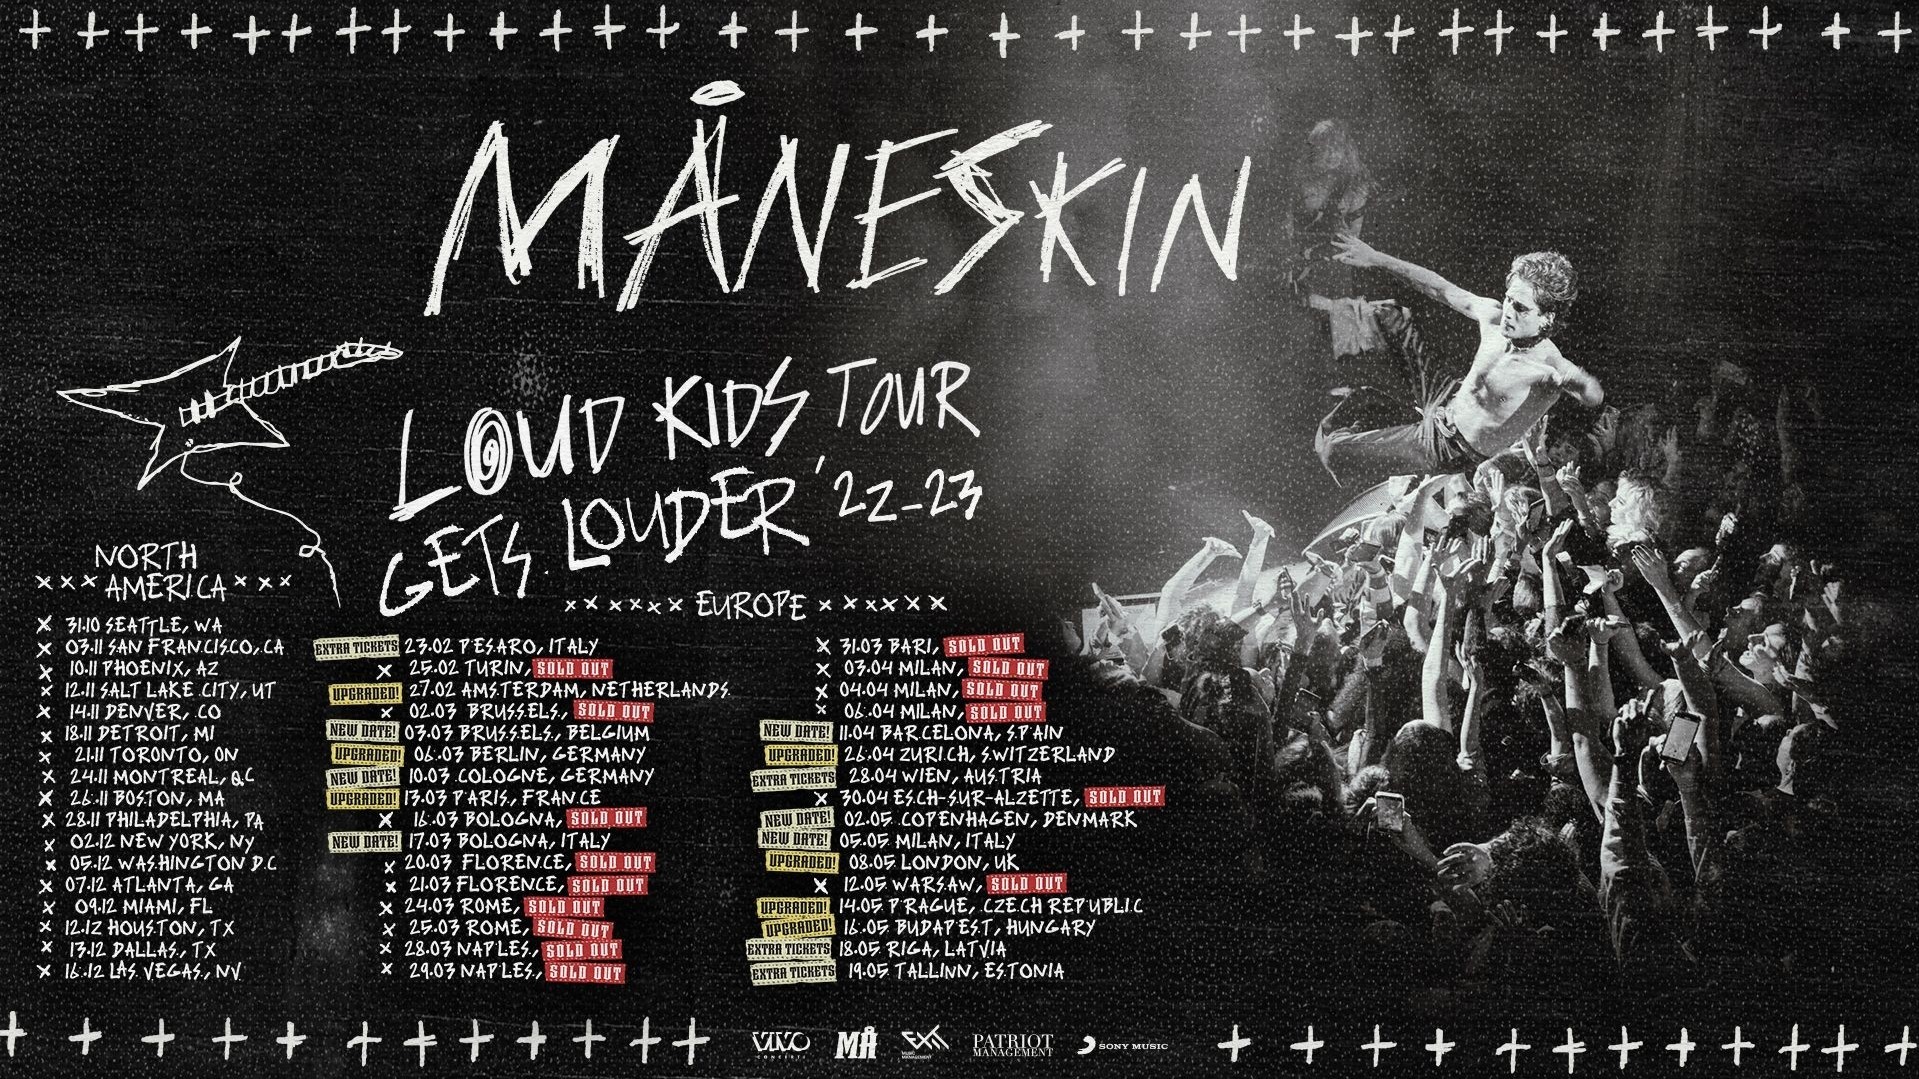 Måneskin "Loud Kids Tour"